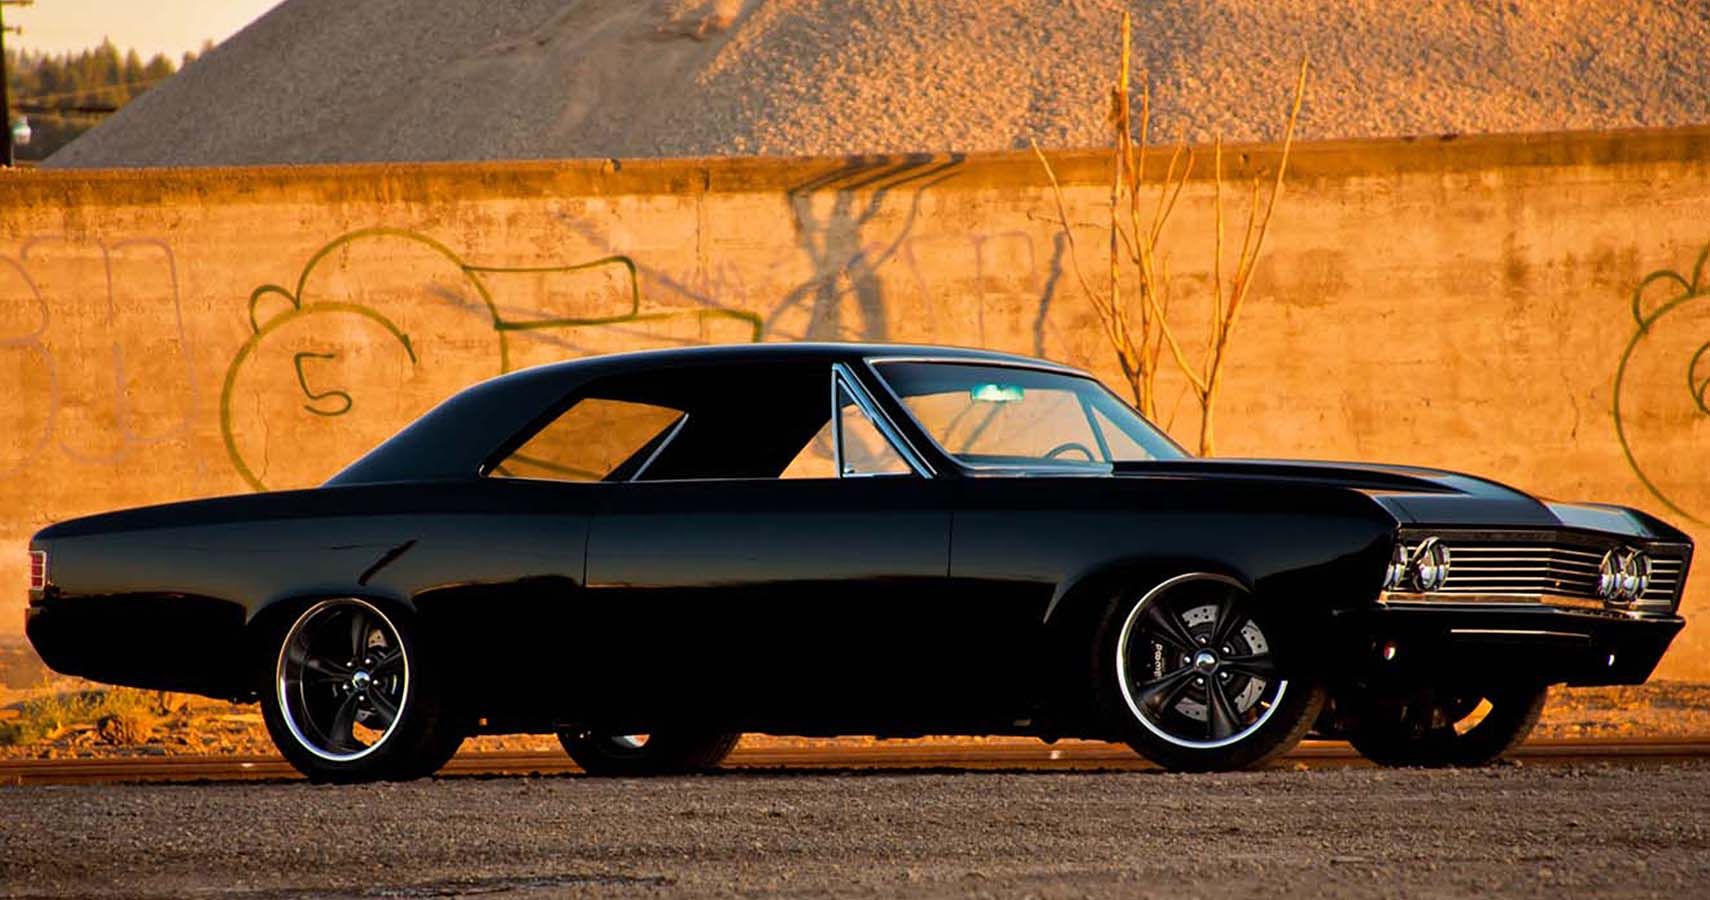 A Midnight Black 1967 Chevrolet Chevelle SS